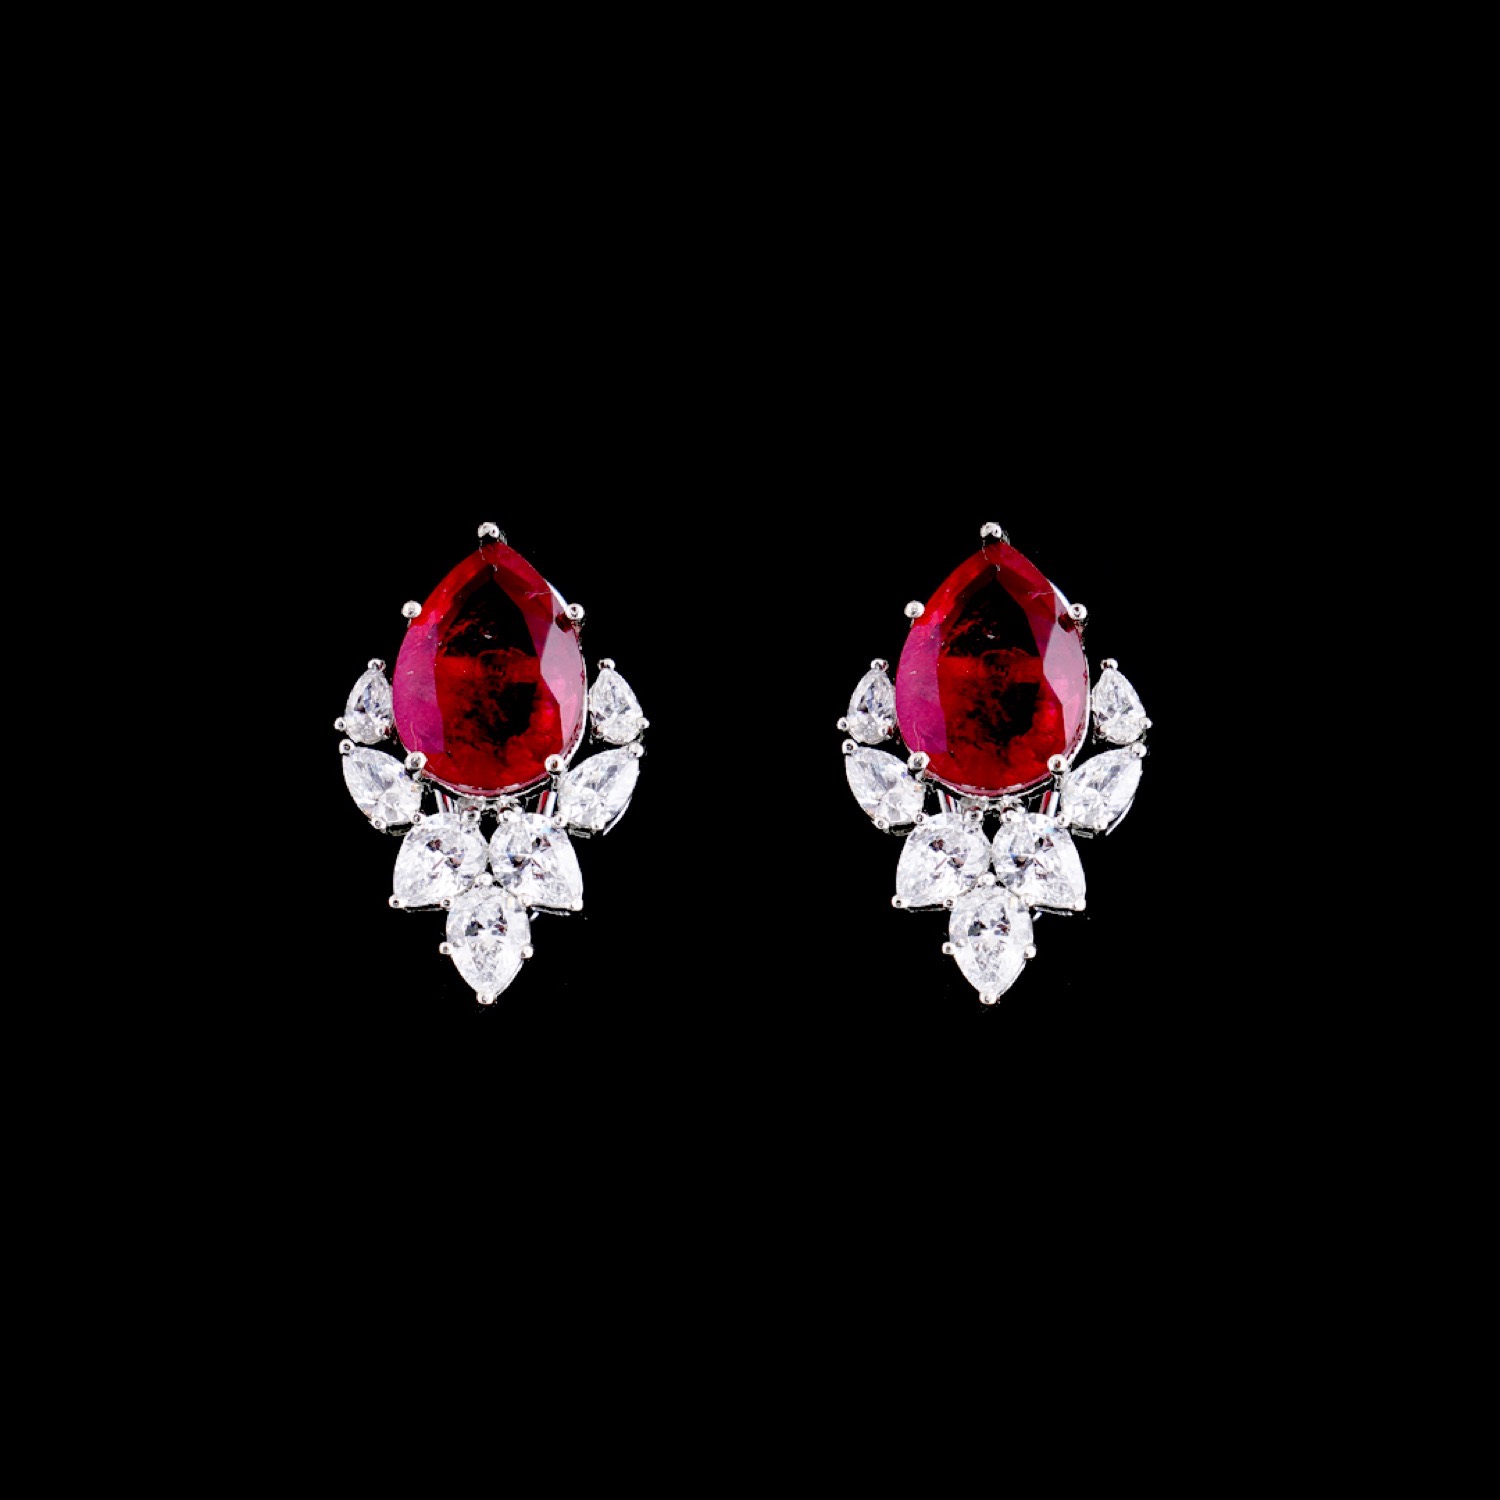 varam_swarovski_white_and_red_stone_earrings_1-1